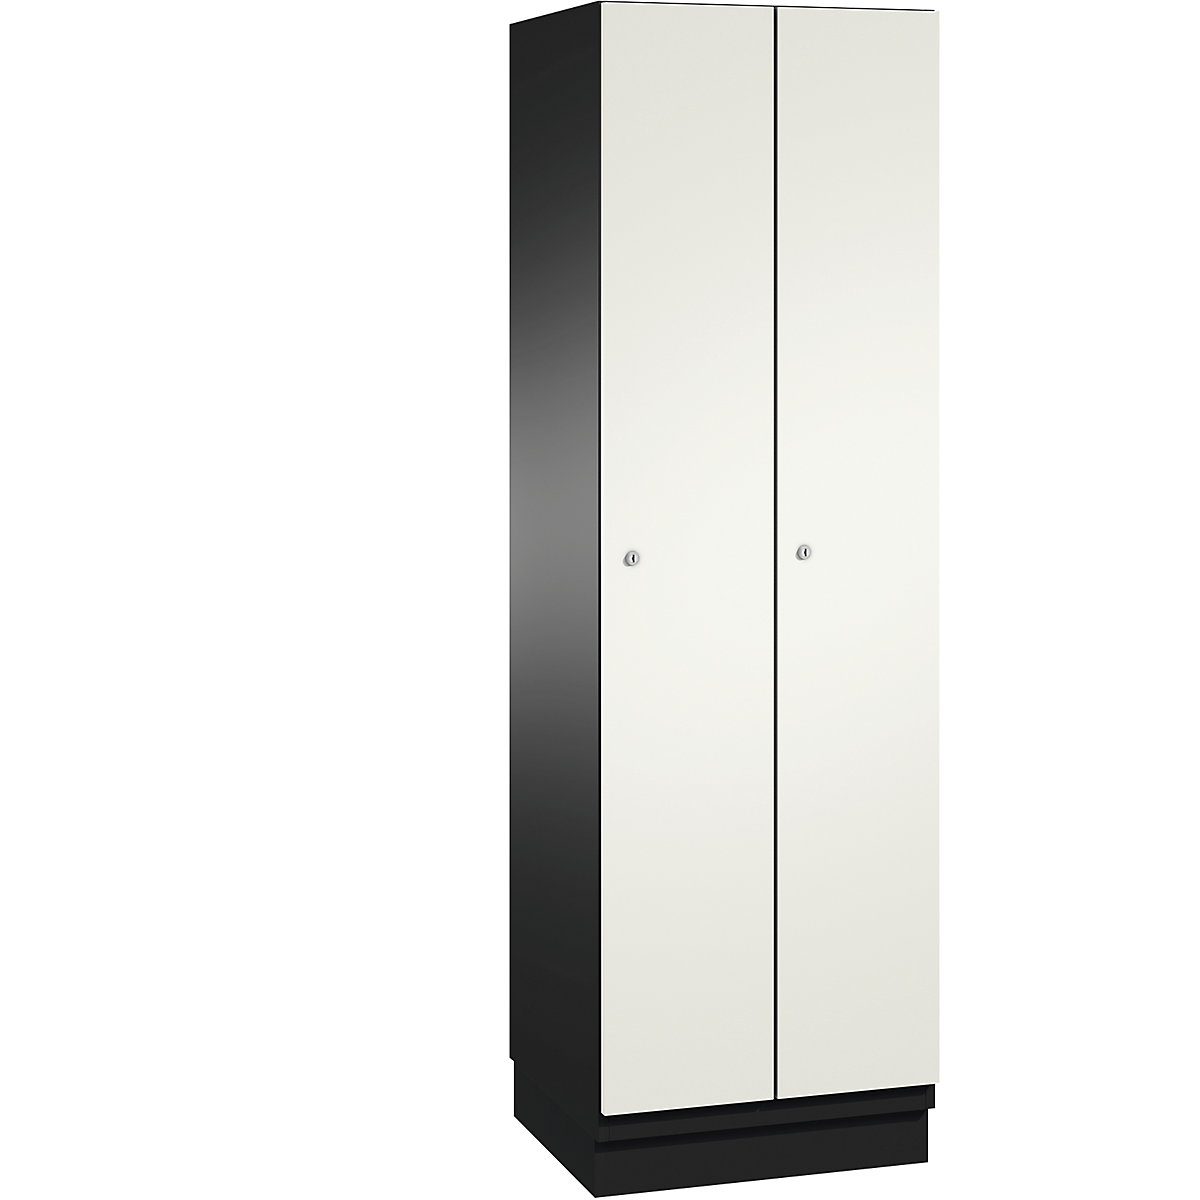 CAMBIO cloakroom locker with sheet steel doors – C+P, 2 compartments, 600 mm wide, body black grey / door pure white-6